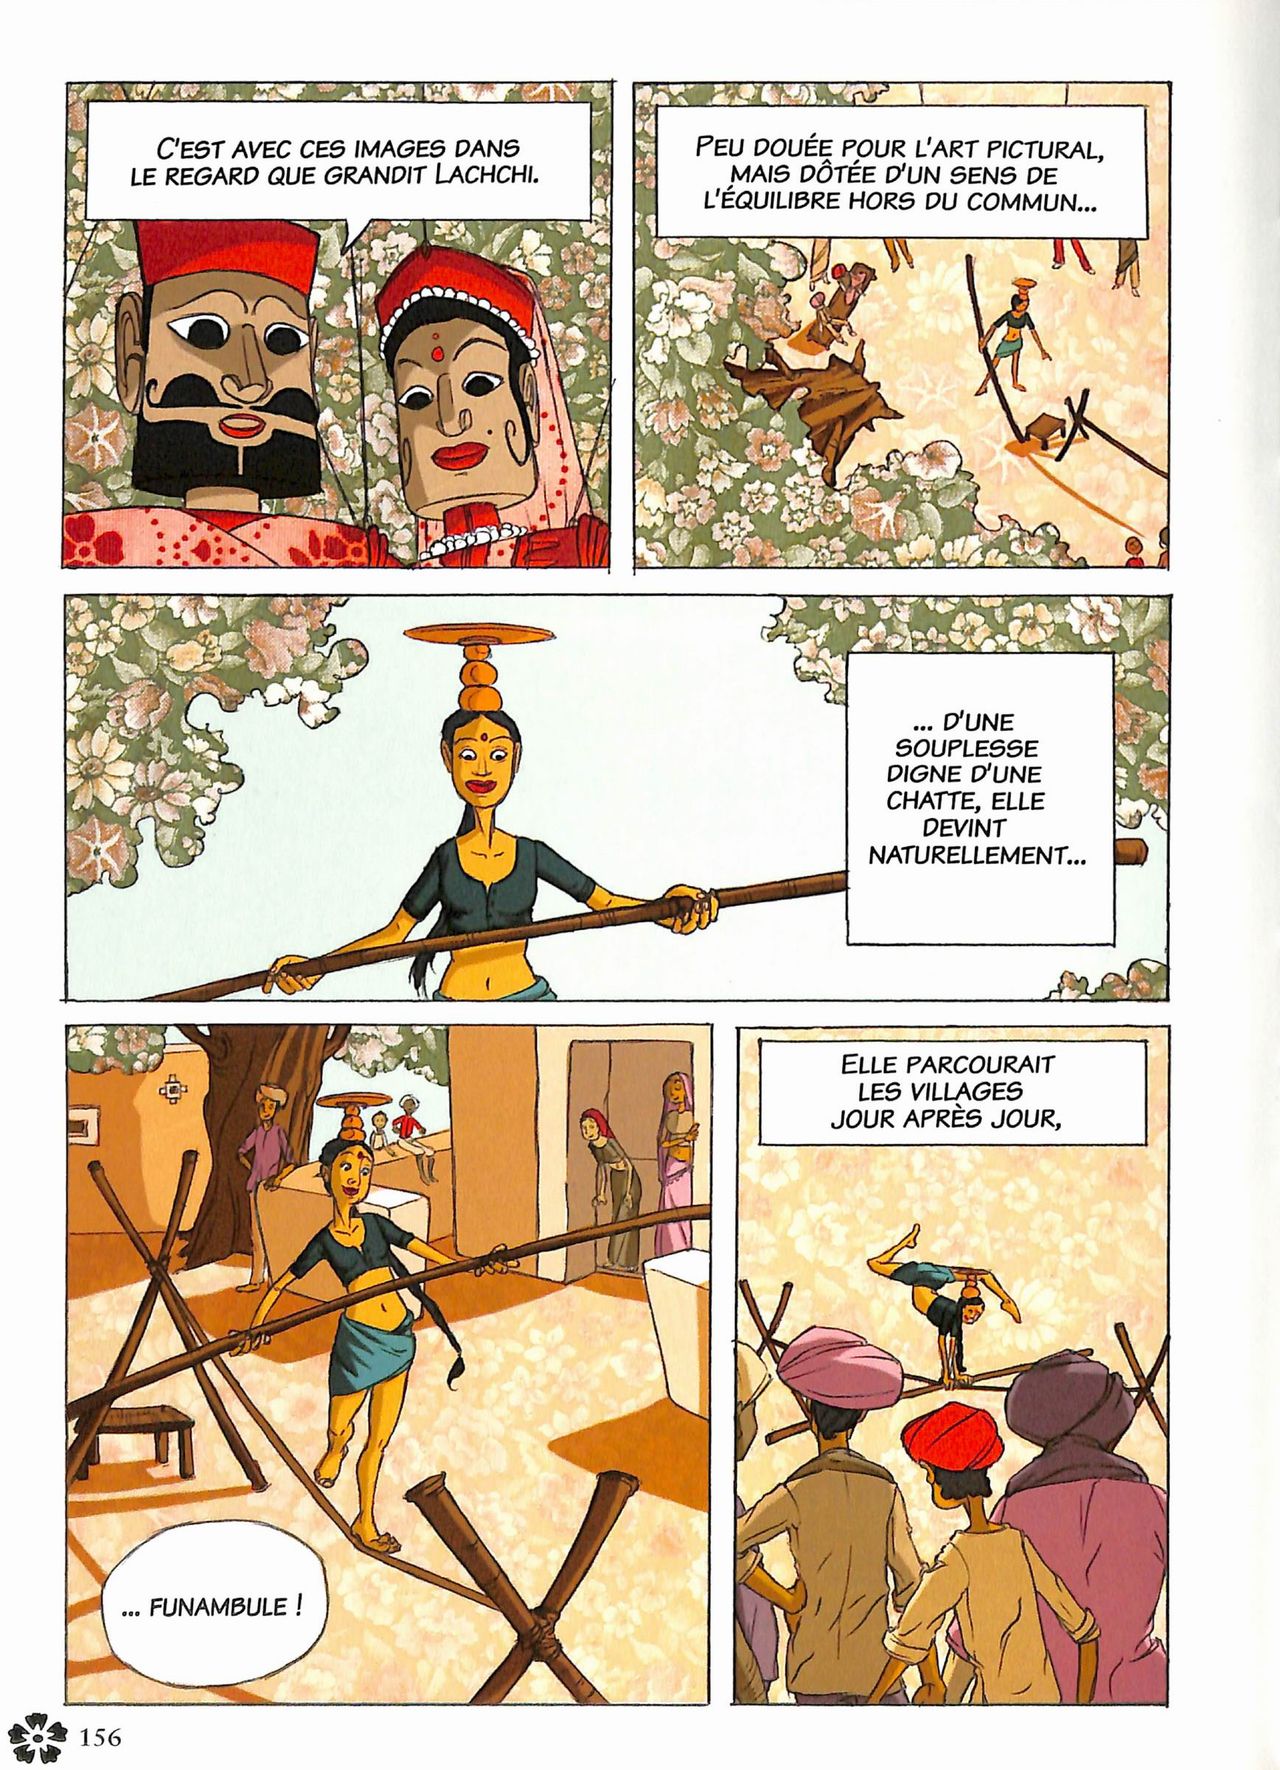 Kama Sutra en bandes dessinées - Kama Sutra with Comics numero d'image 156